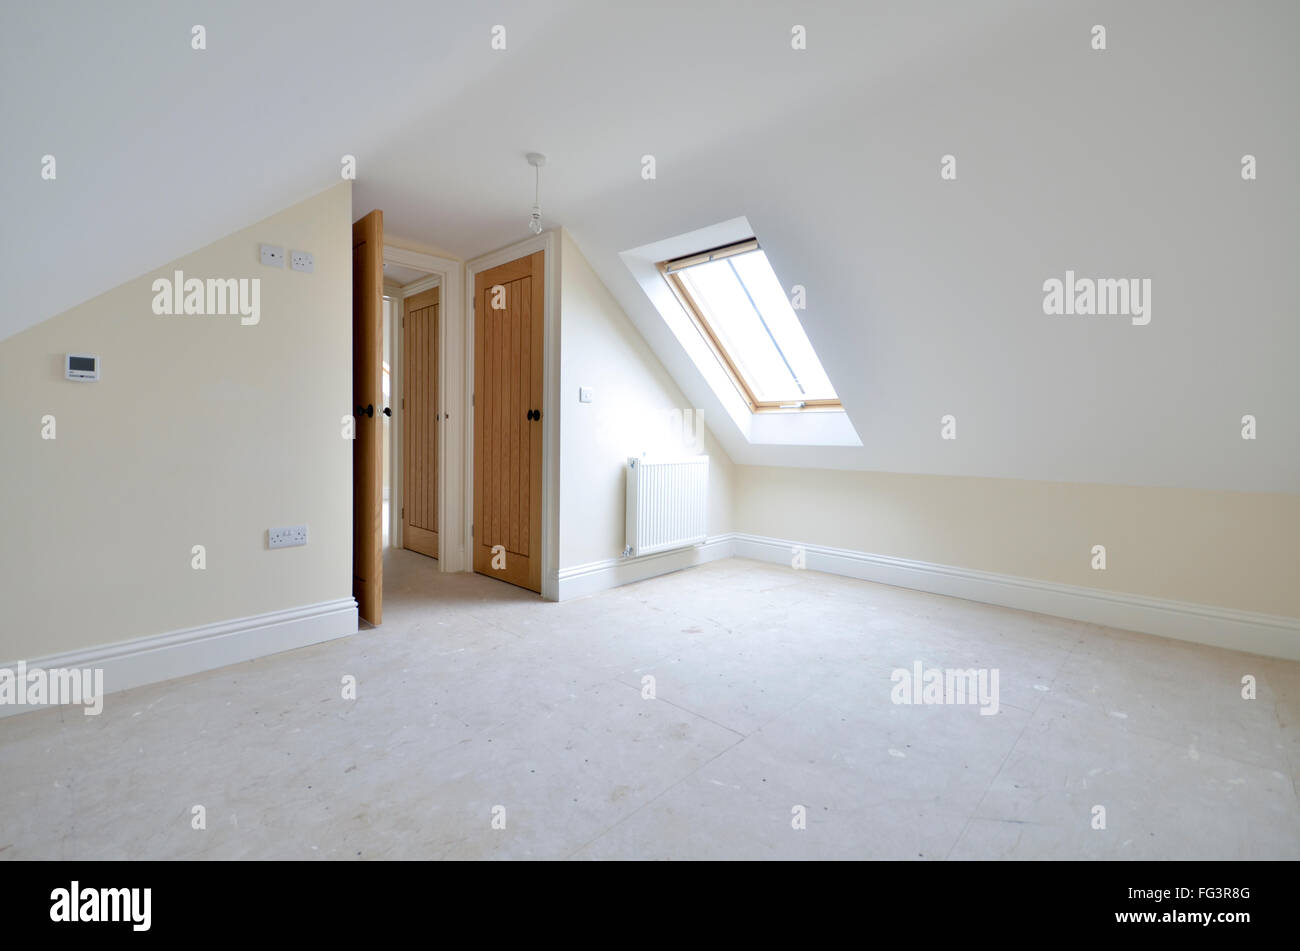 New build bedroom in attic conversion Stock Photo - Alamy